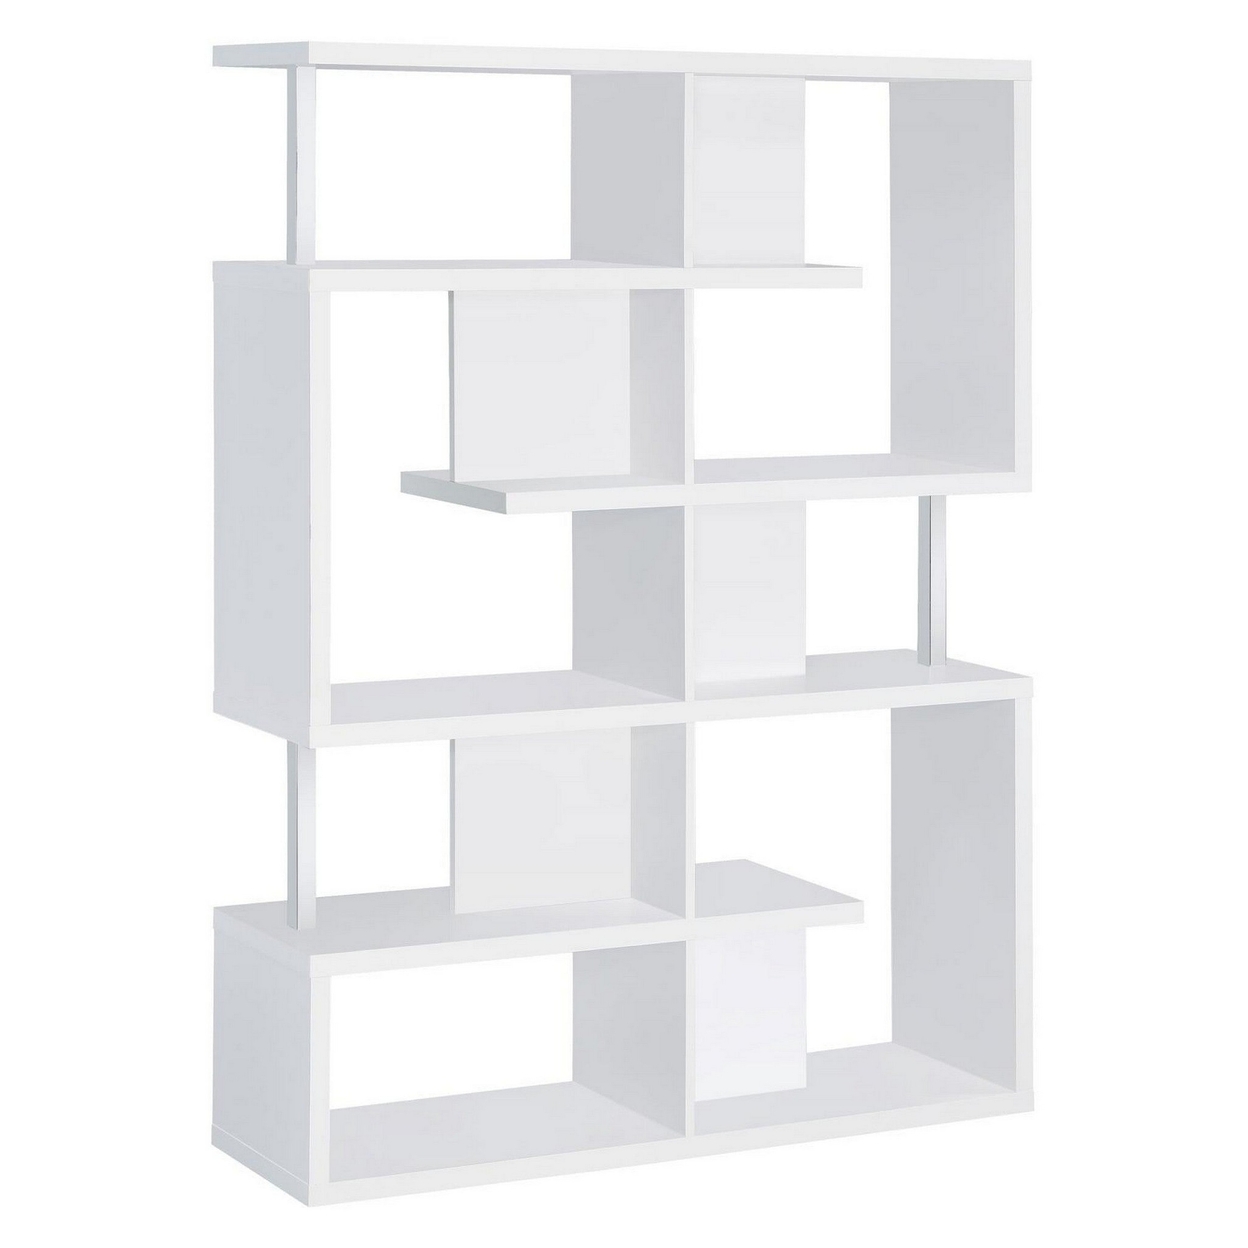 Splendid White Bookcase With Chrome Support Beams- Saltoro Sherpi